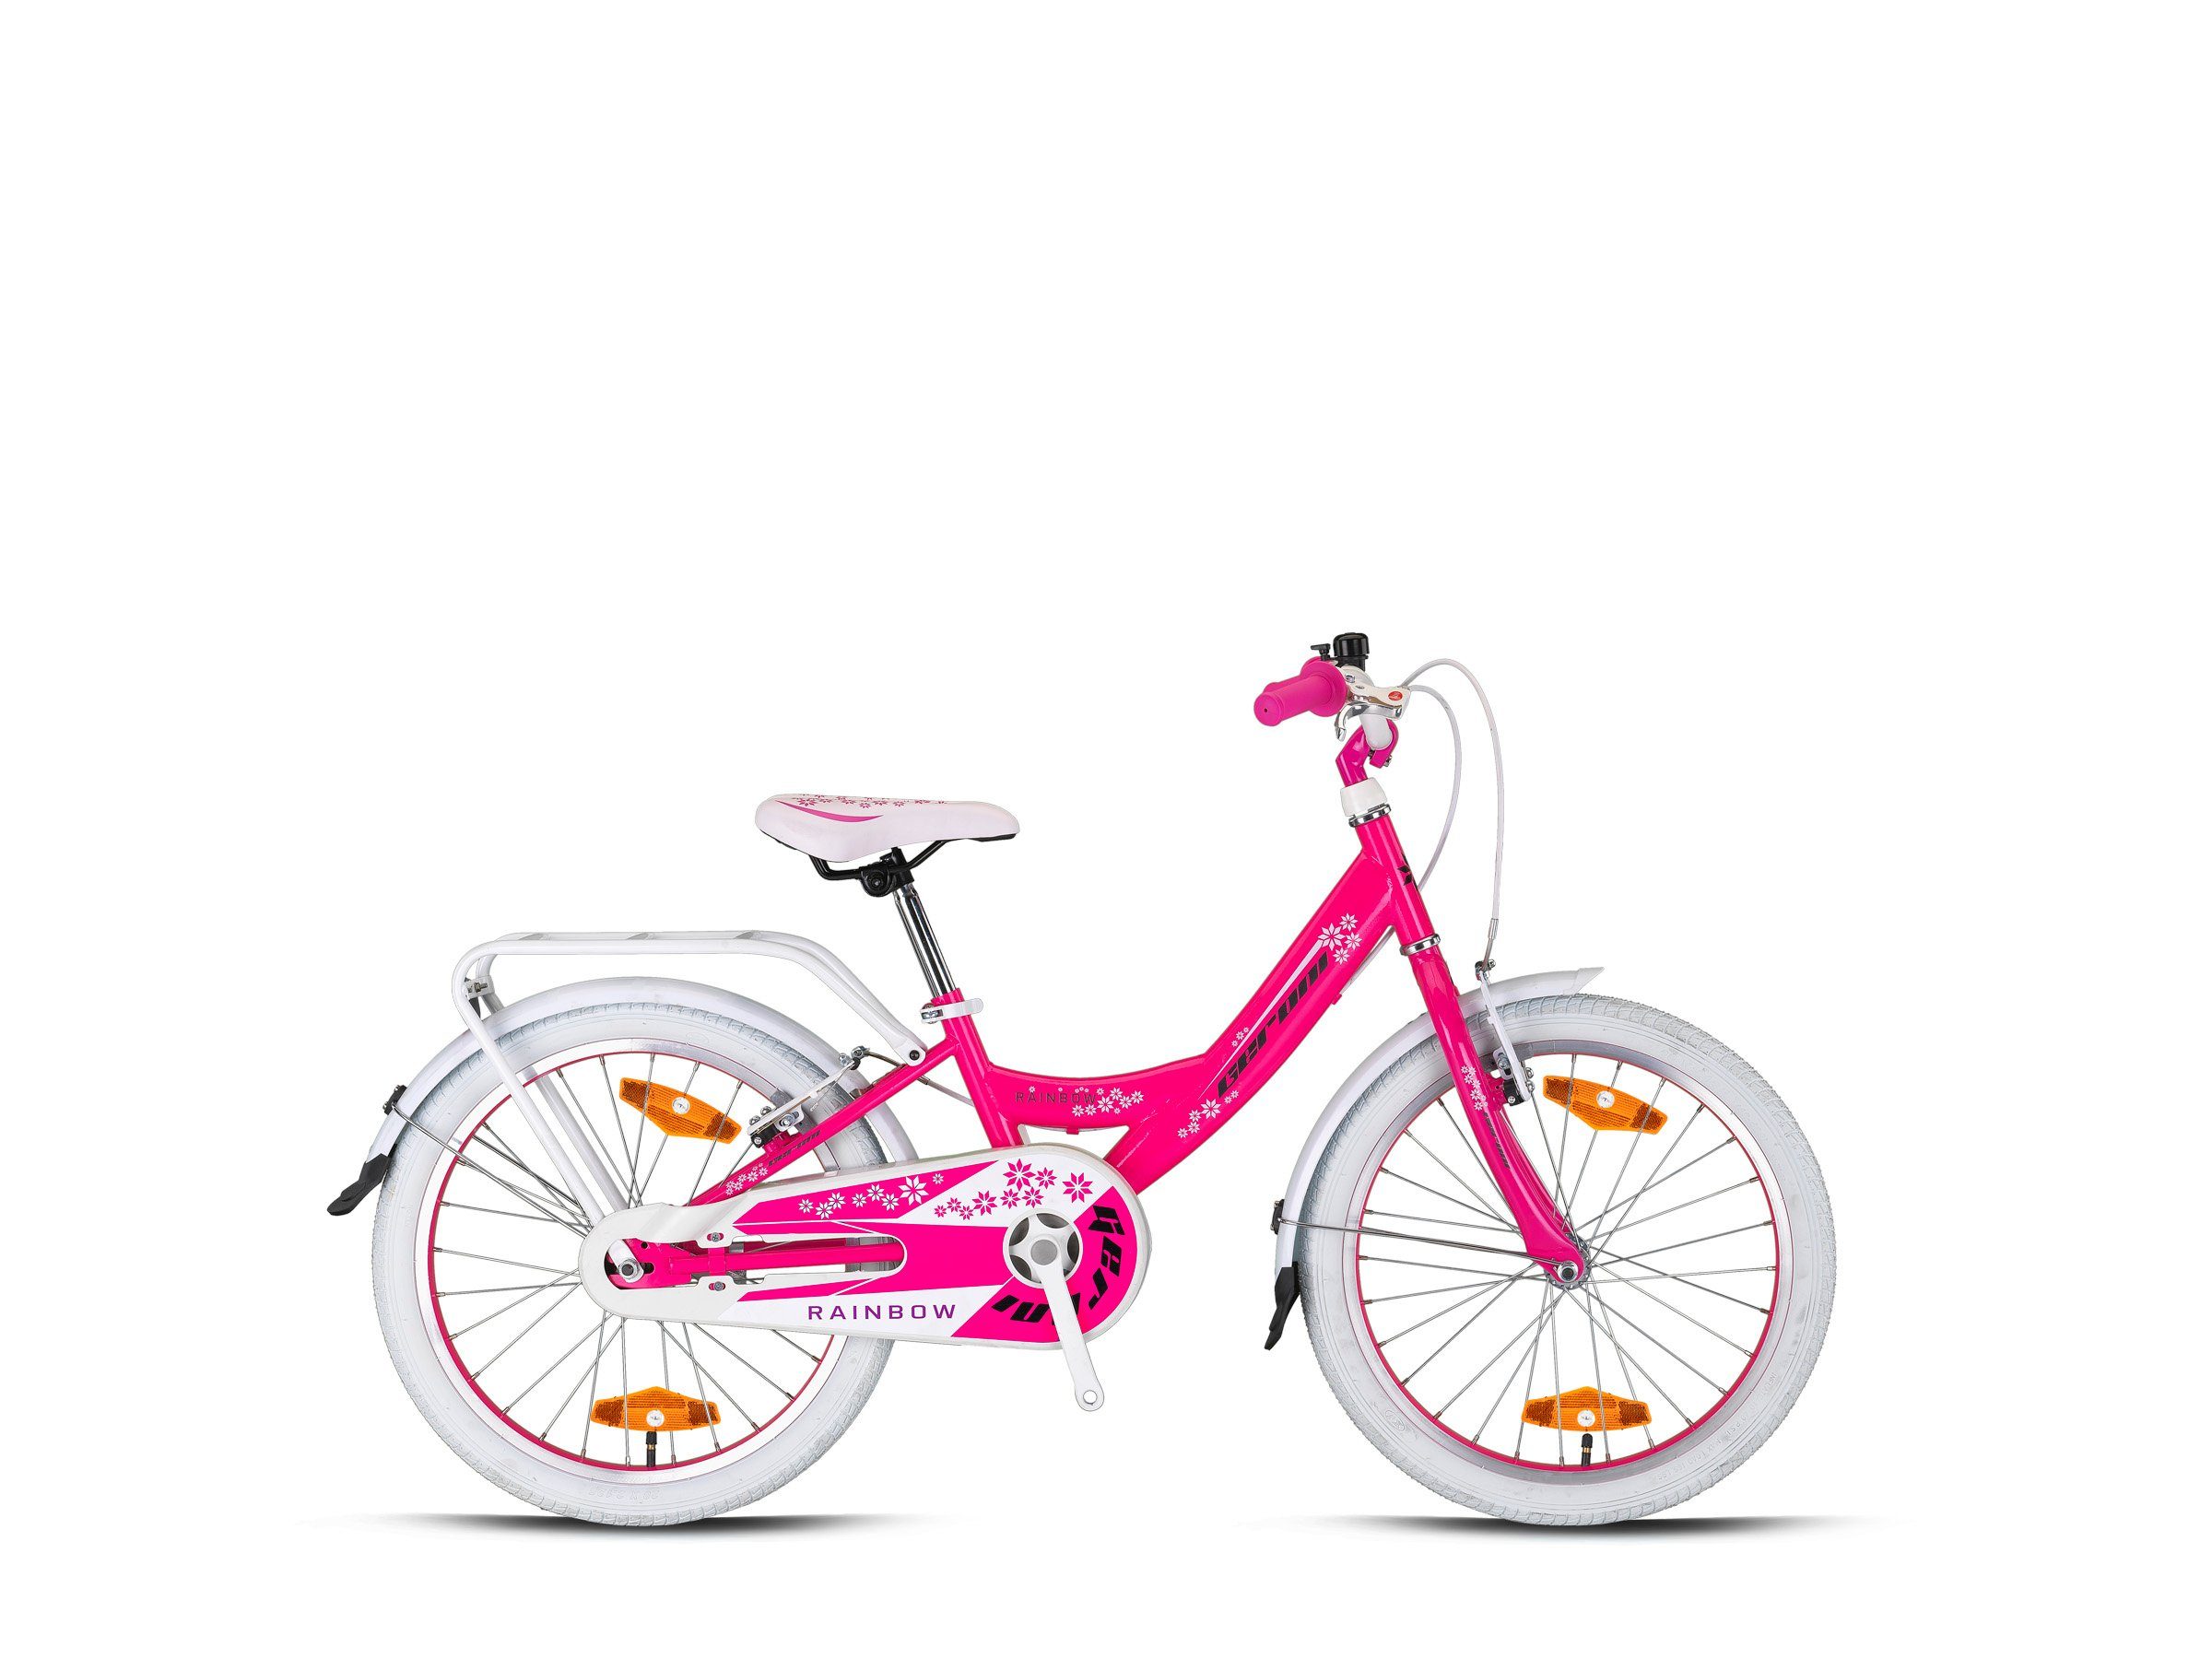 Rezzak Kinderfahrrad 20 Zoll Fahrrad Mädchenfahrrad Rücktrittbremse Pink, 1 Gang, V-bremse vorne Hinten und Rücktrittbremse Pink ab 6 Jahren